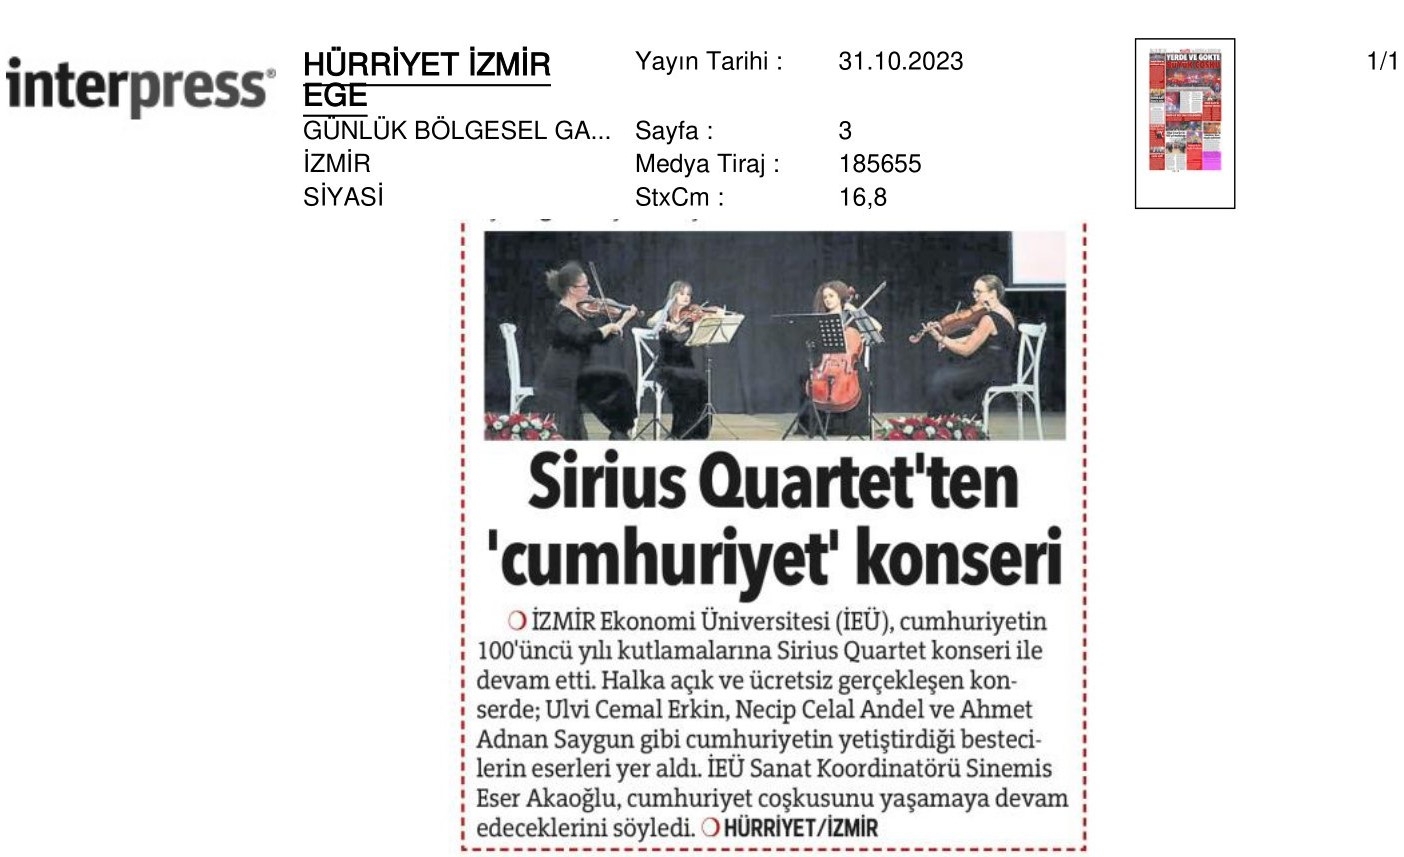 Sirius Quartet'ten Unutulmaz Konser